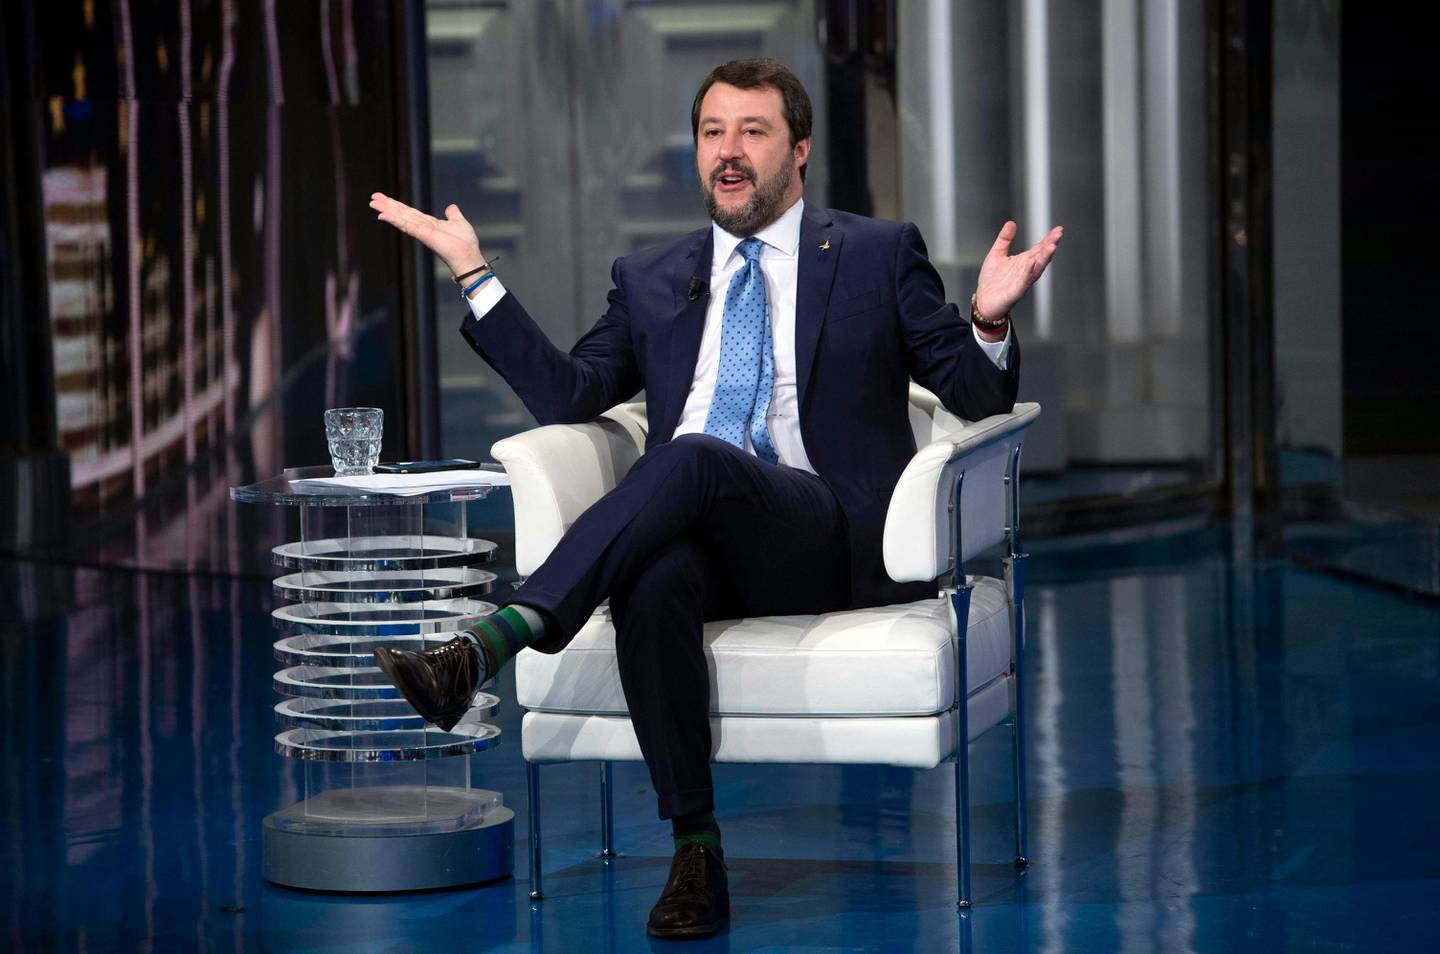 The League party's leader, Matteo Salvini, attends a TV show in Rome, Tuesday, Dec. 3, 2019. (Maurizio Brambatti/ANSA via AP)